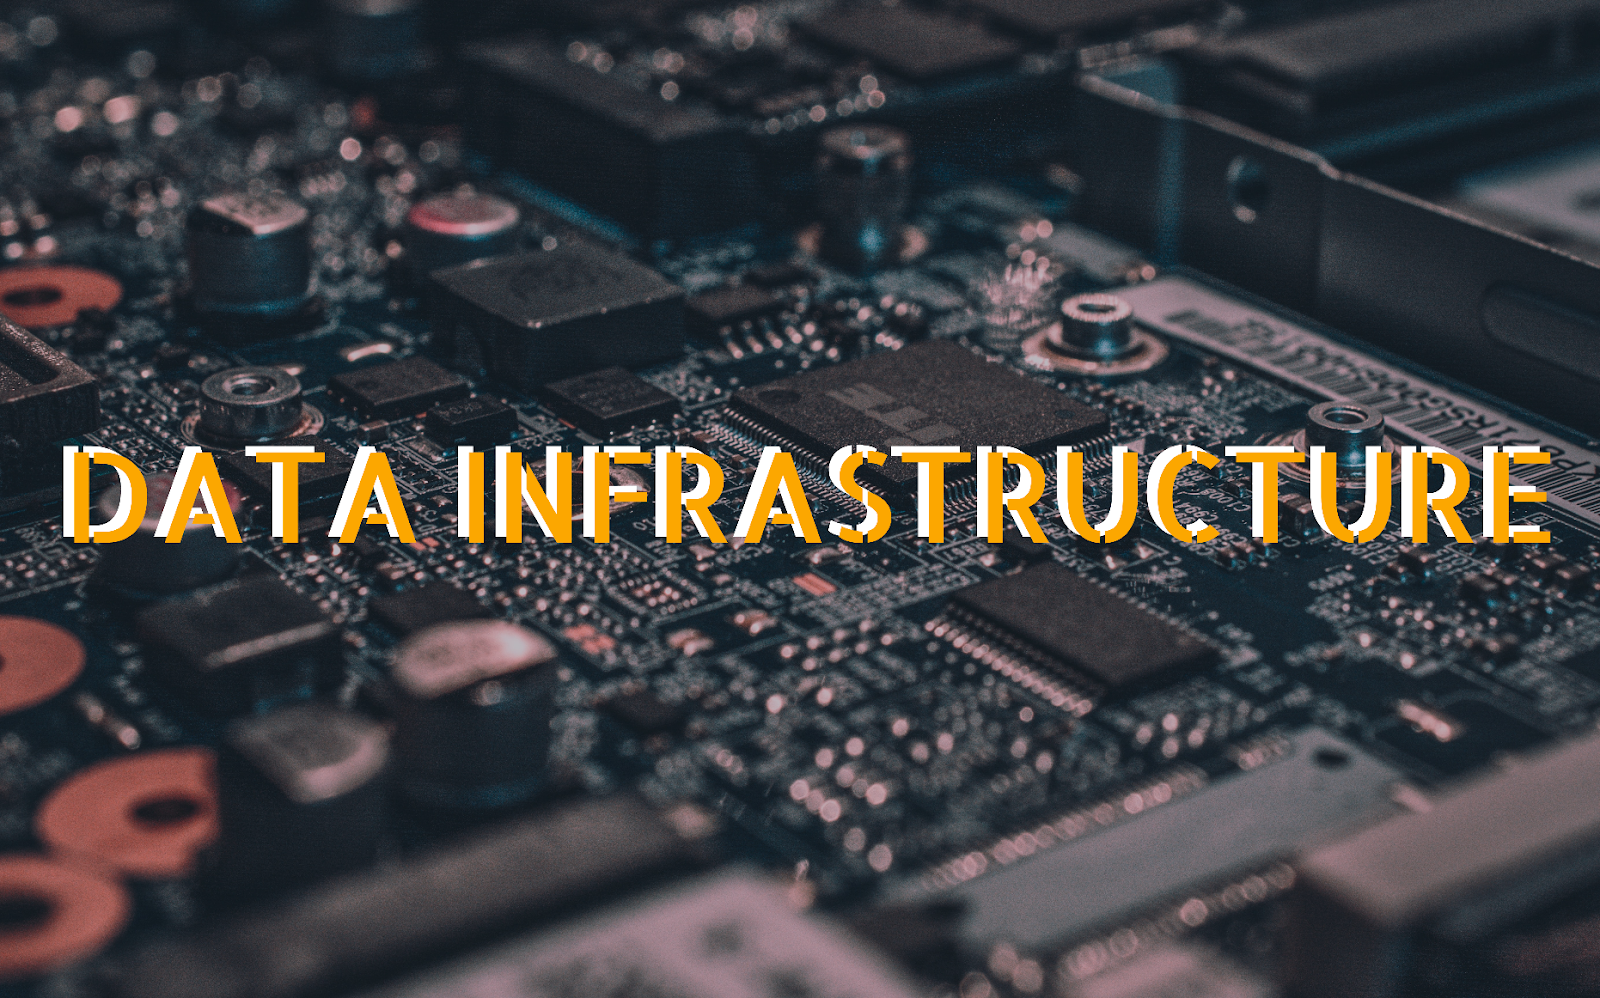 data-driven infrastructure, data infrastructure, database infrastructure, data infrastructure definition